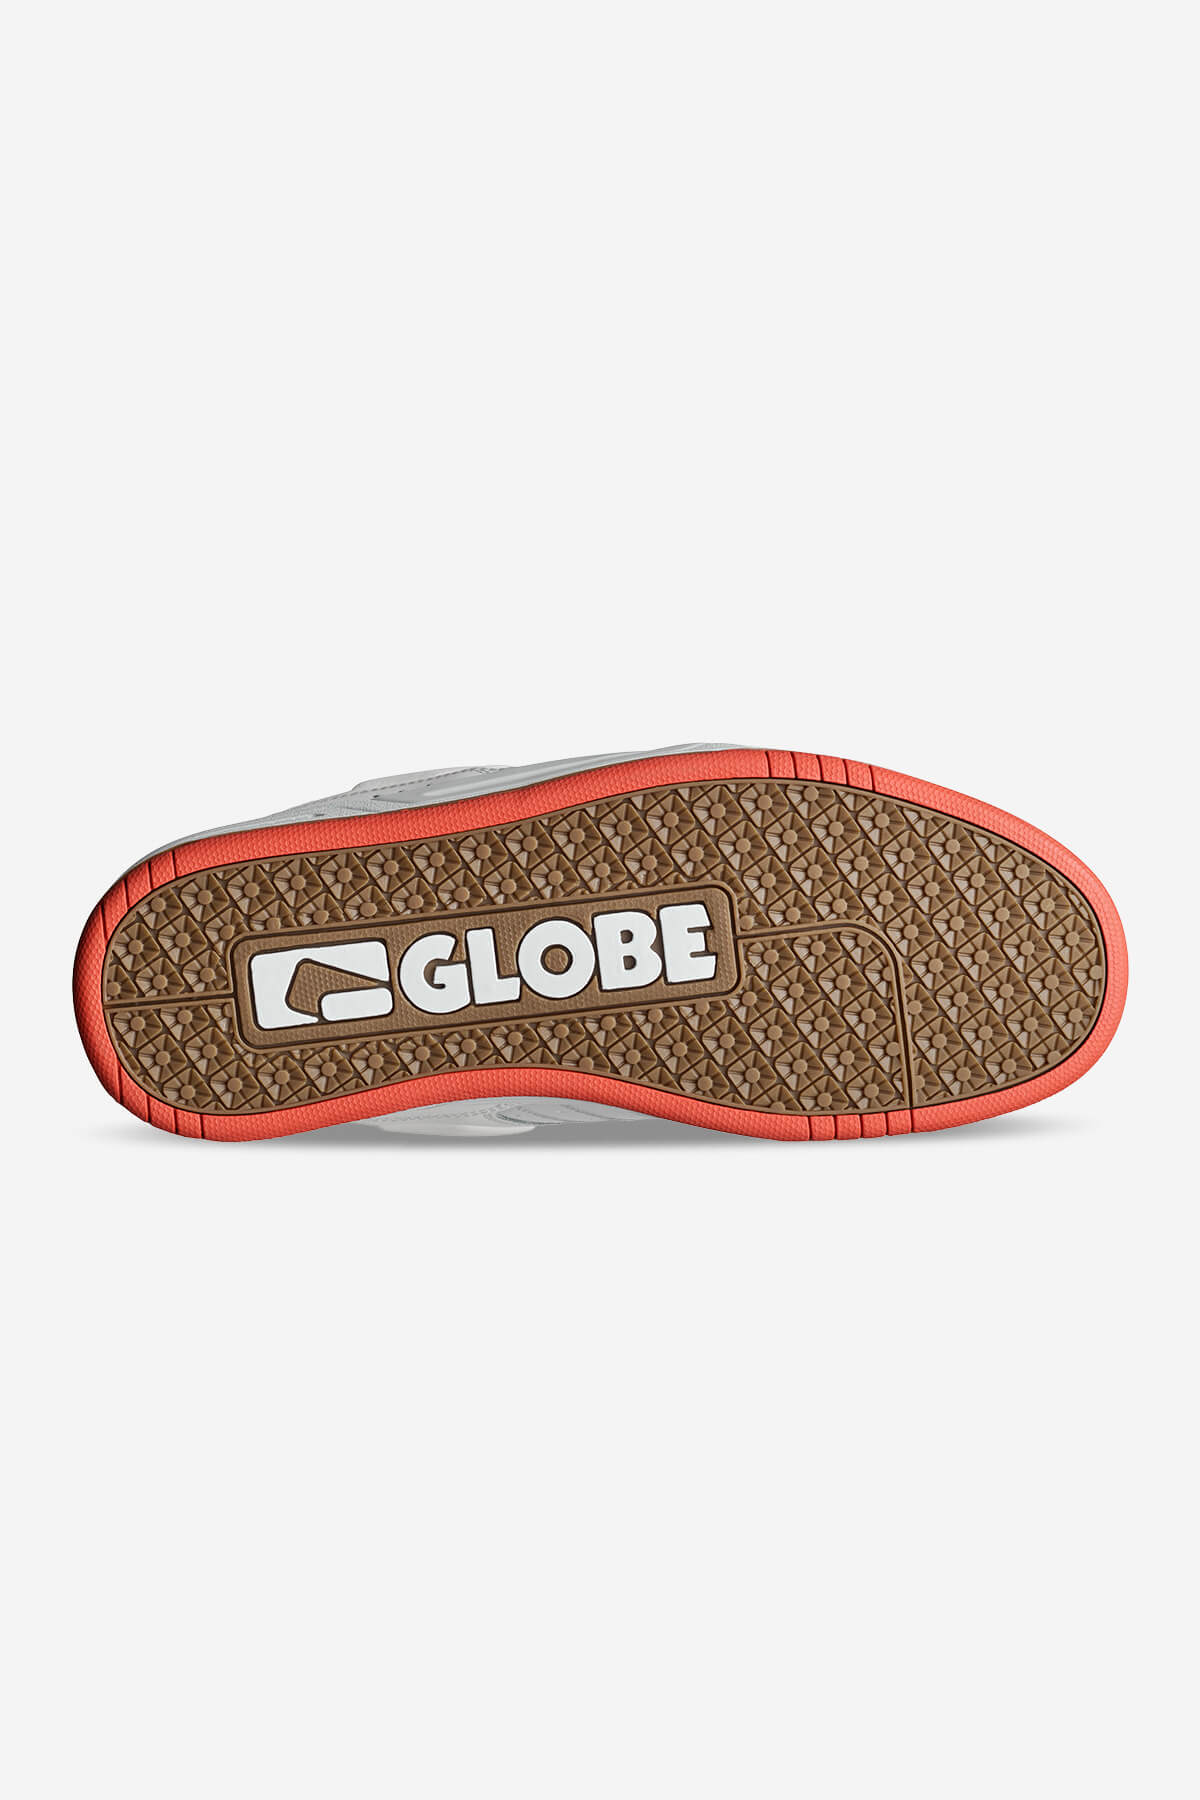 Globe - Fusion - White/Red - skateboard Schuhe